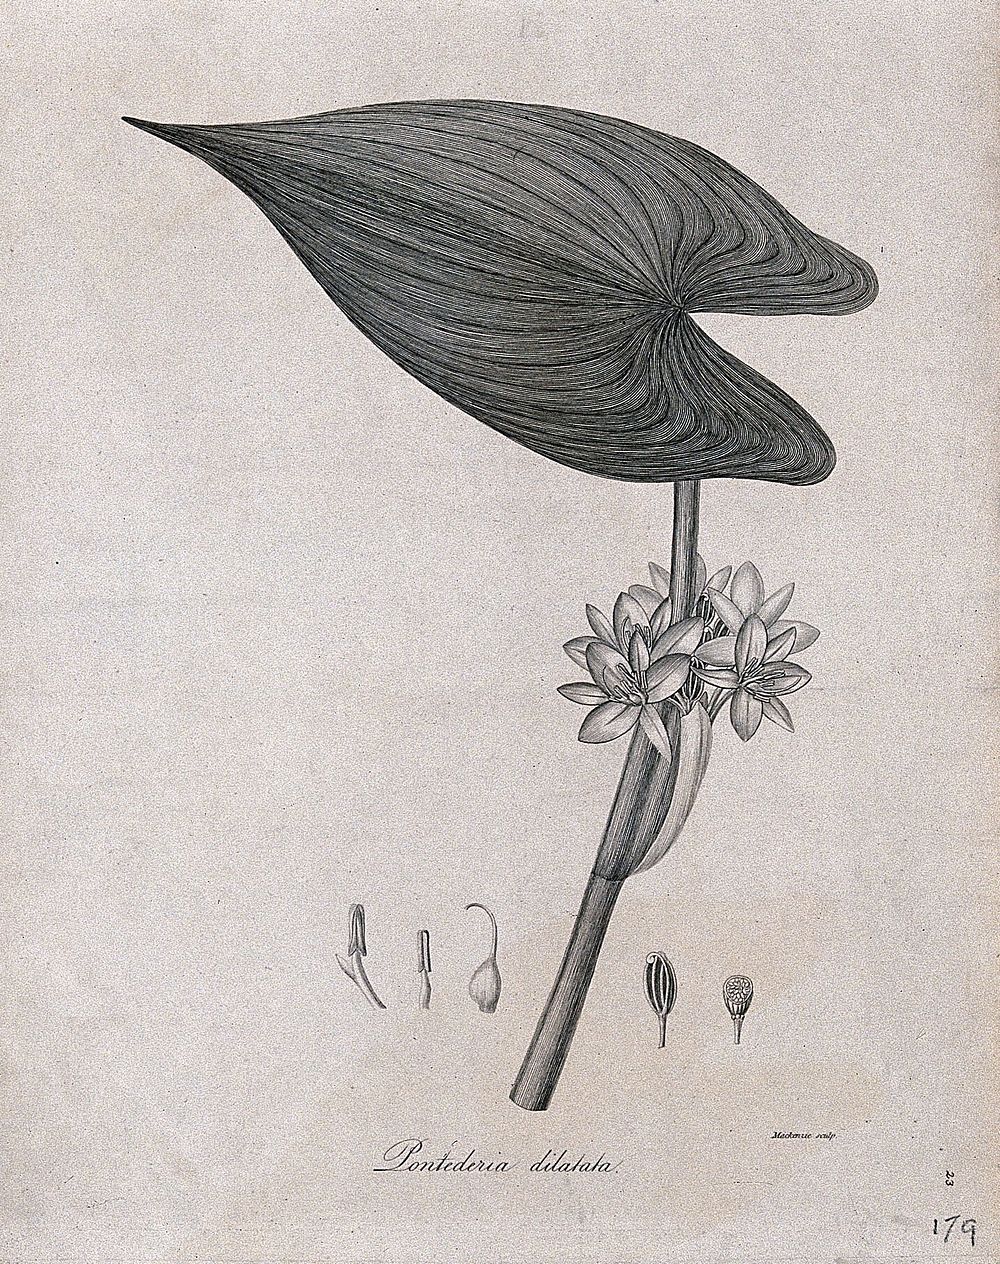 Pontederia dilata: flowering stem with separate floral segments. Line engraving by Mackenzie, c.1795.